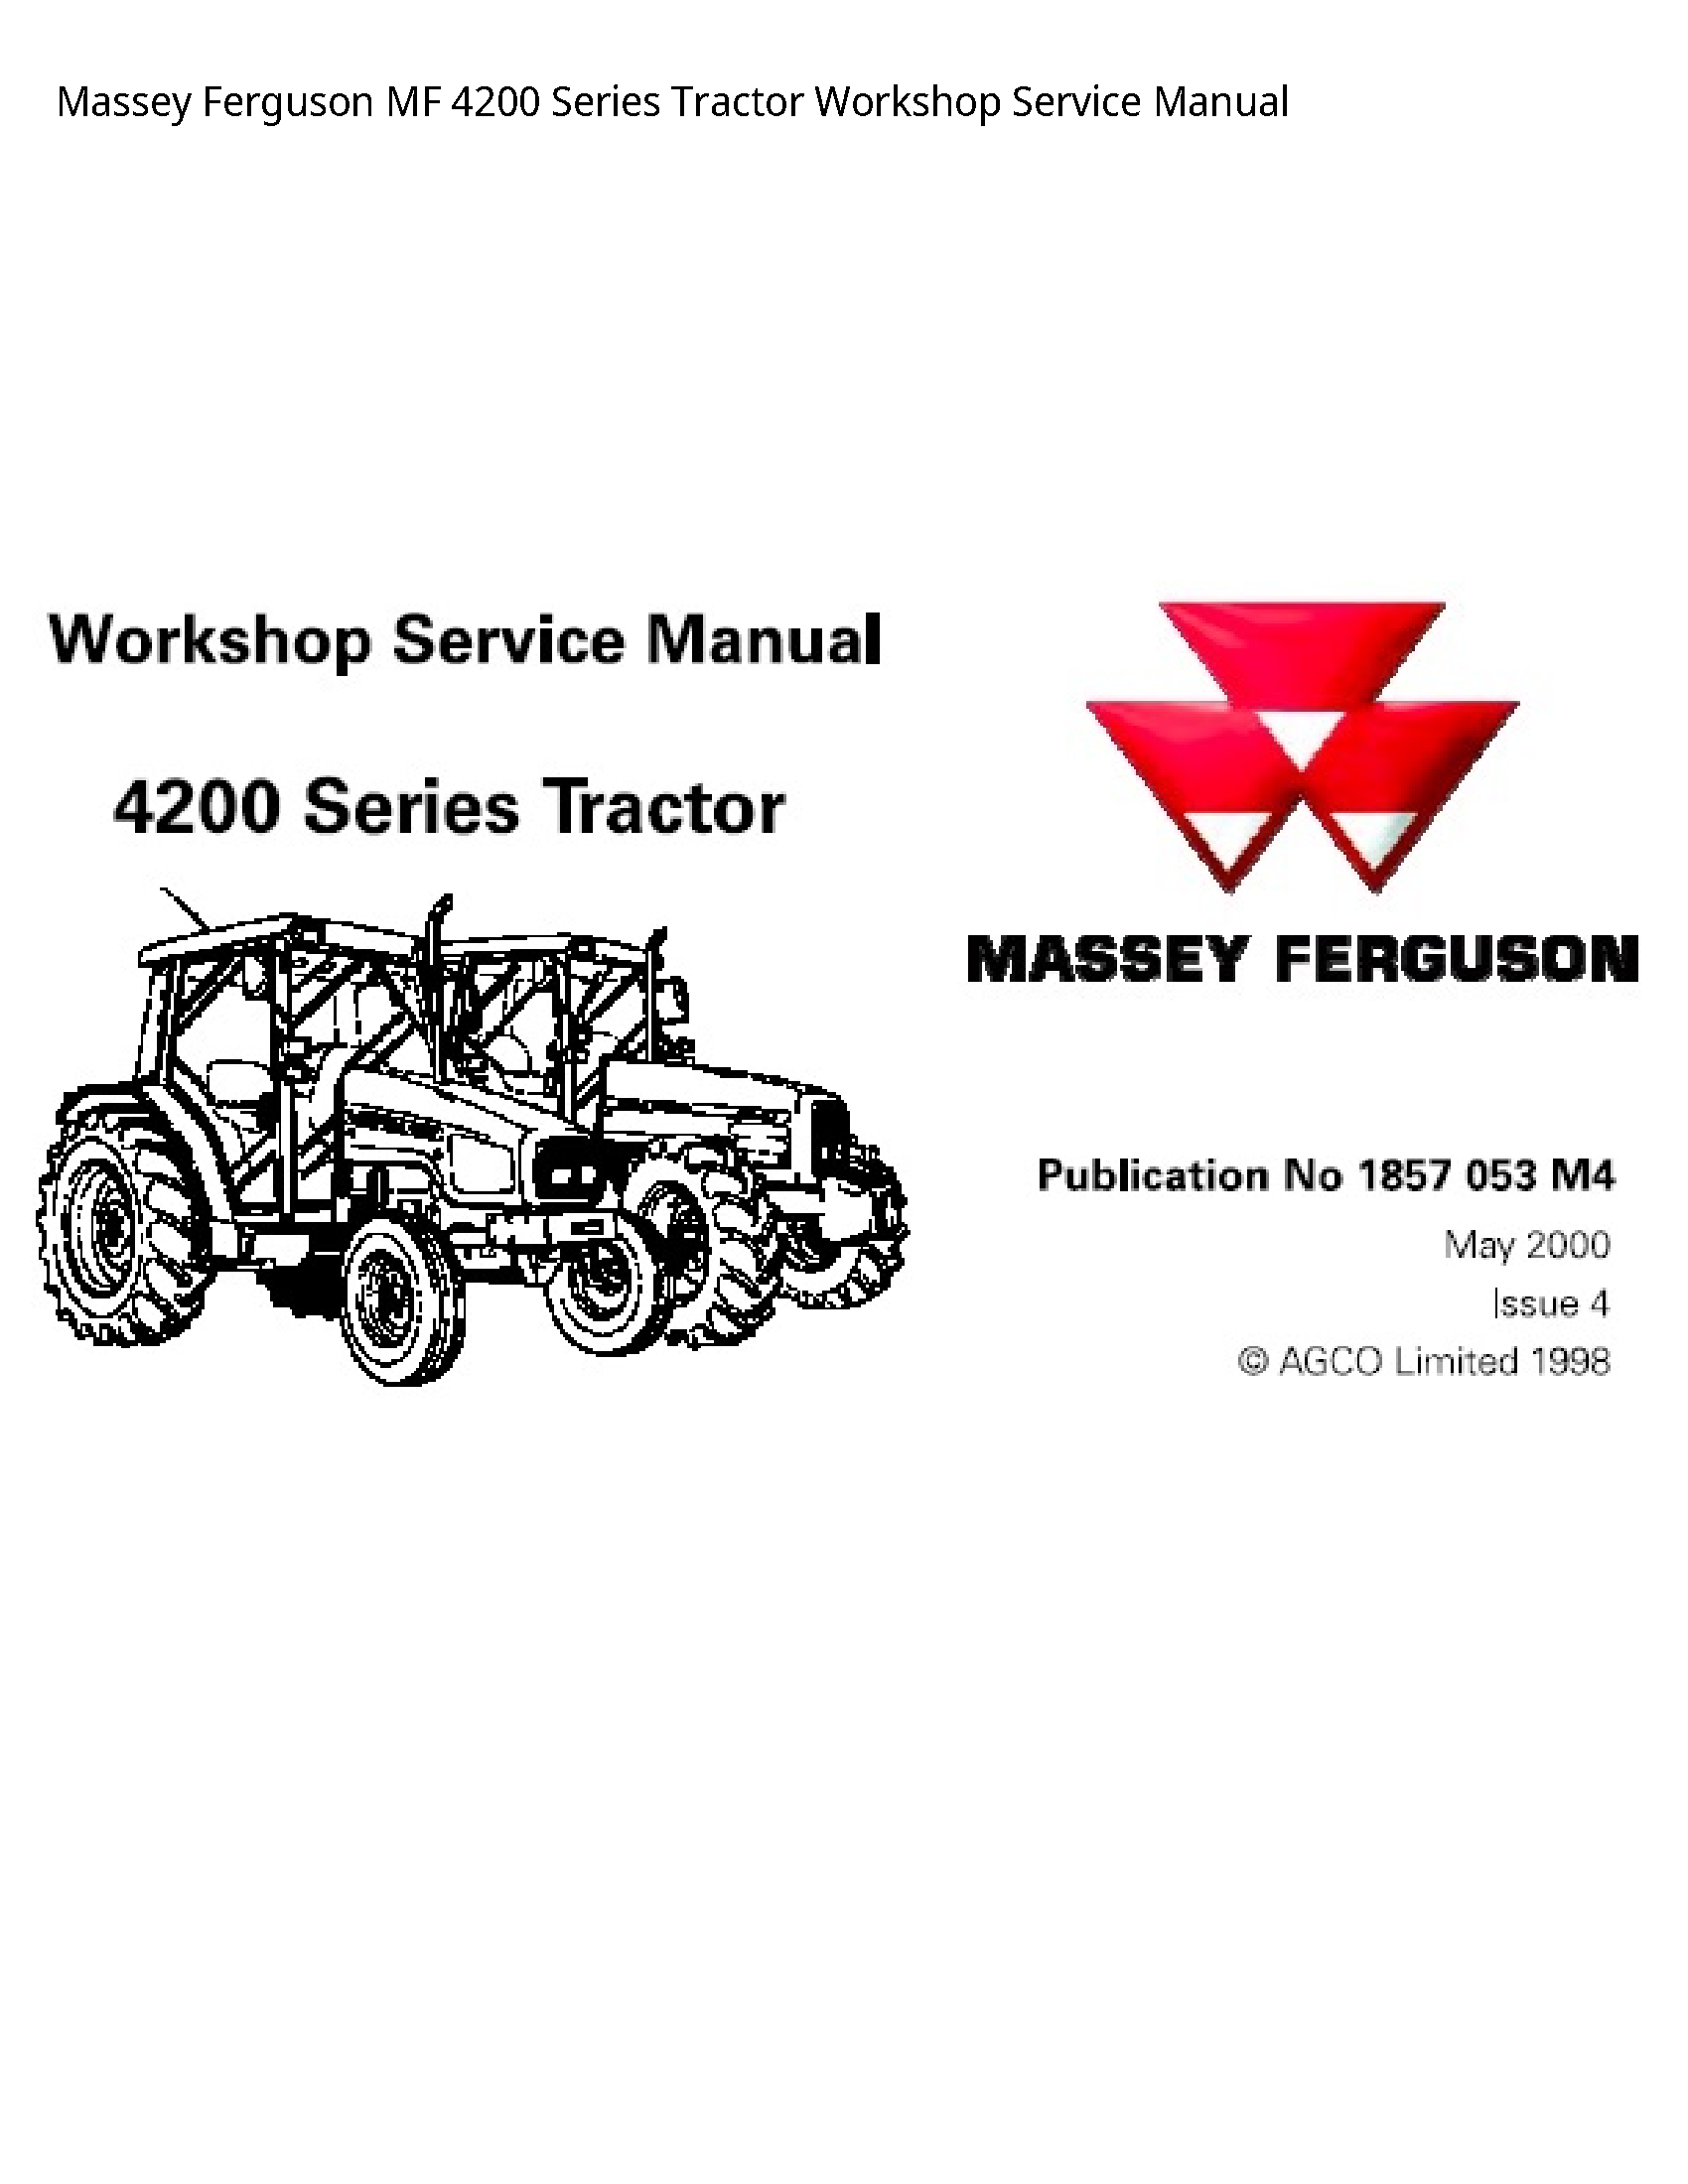 Massey Ferguson 4200 MF Series Tractor Service manual